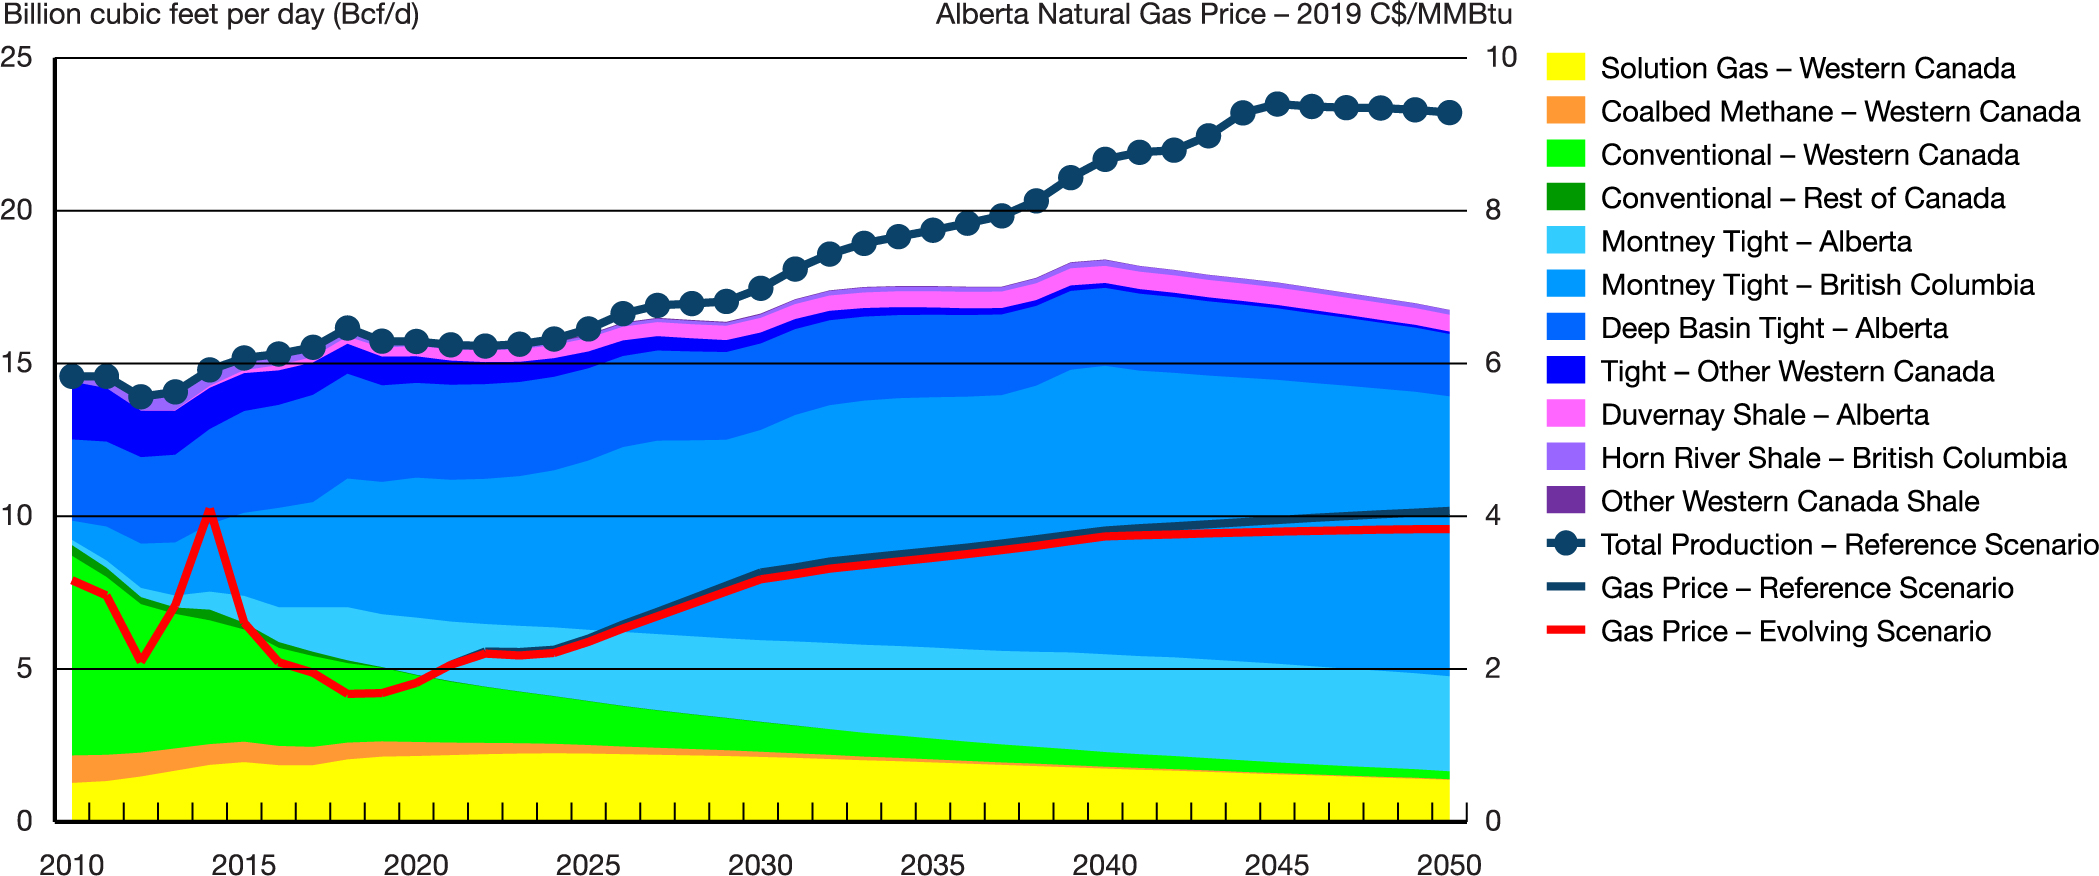 Marketable Natural Gas Production – Evolving Scenario